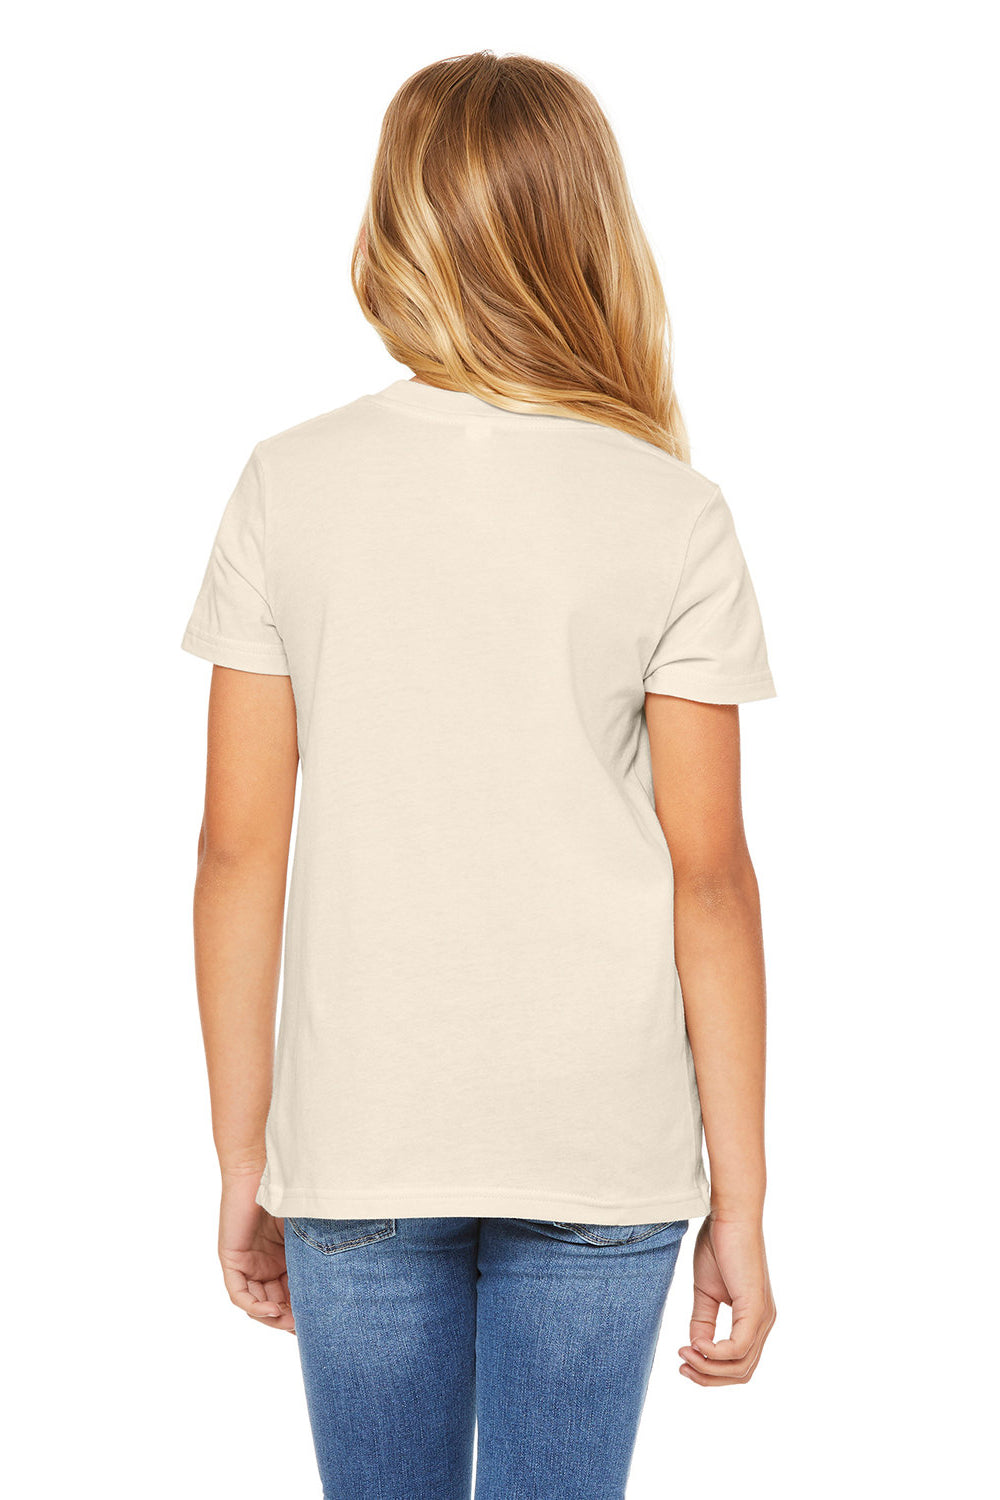 Bella + Canvas 3001Y Youth Jersey Short Sleeve Crewneck T-Shirt Natural Model Back